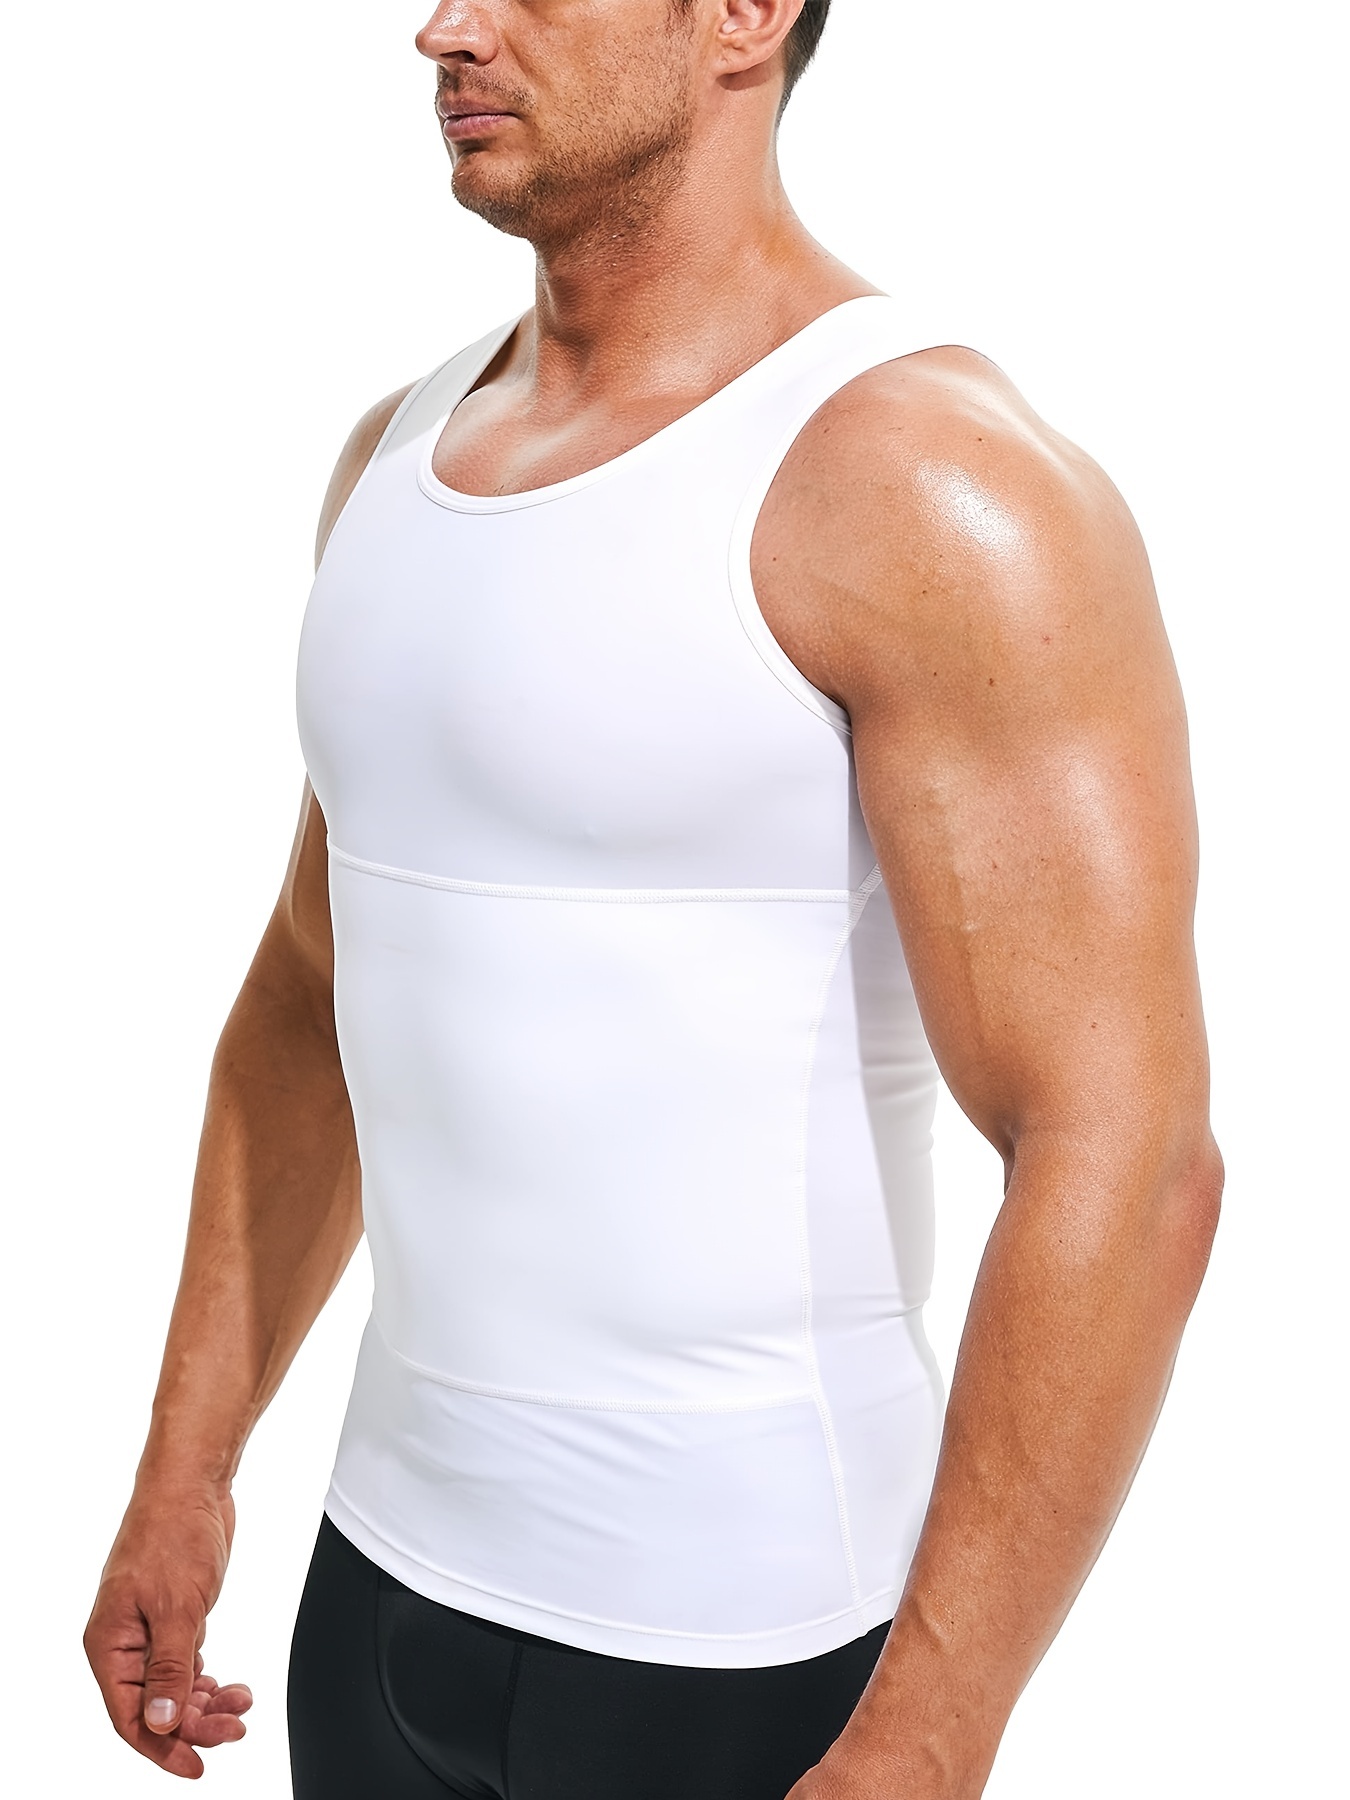 Slimming vest Men's Slimming Underwear Body Shaper Waist Cincher